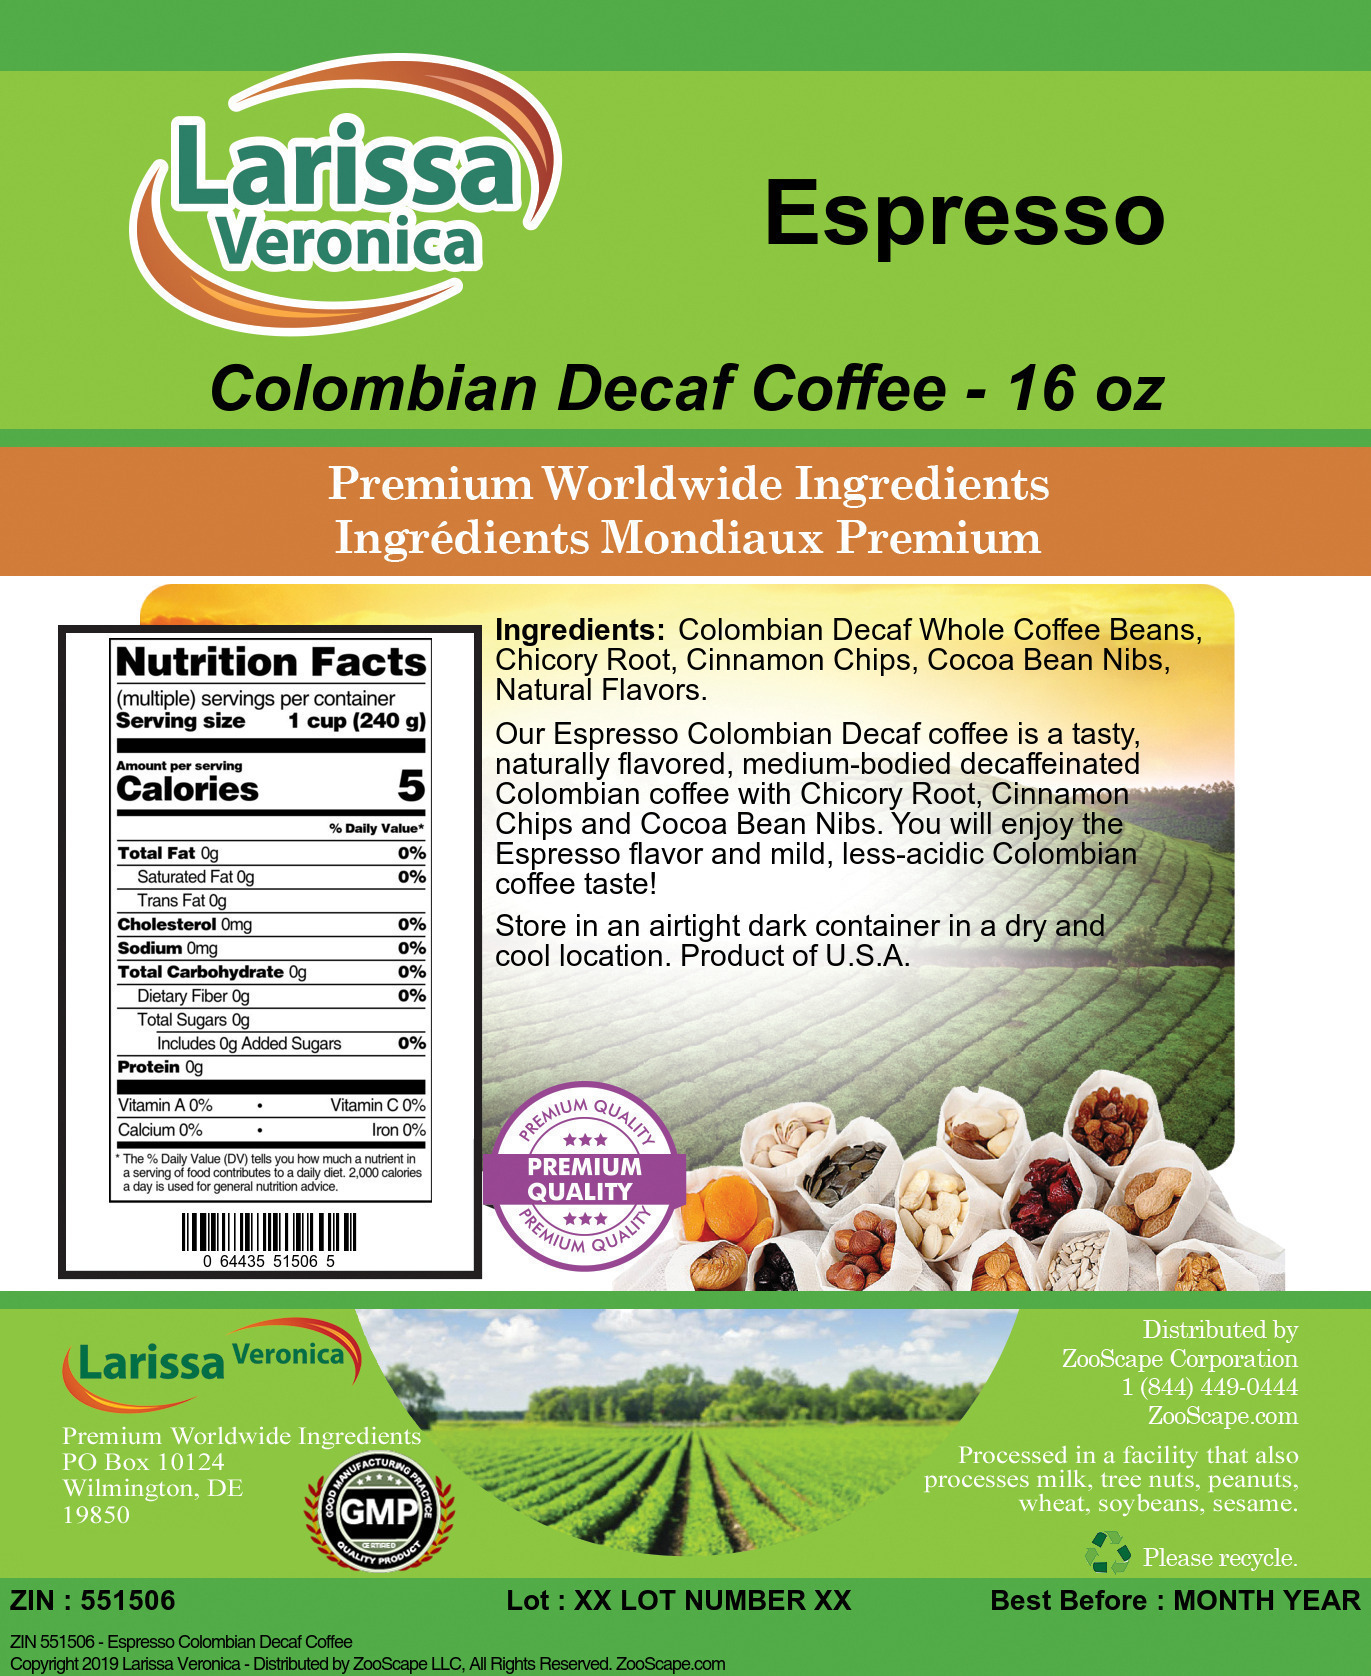 Espresso Colombian Decaf Coffee - Label